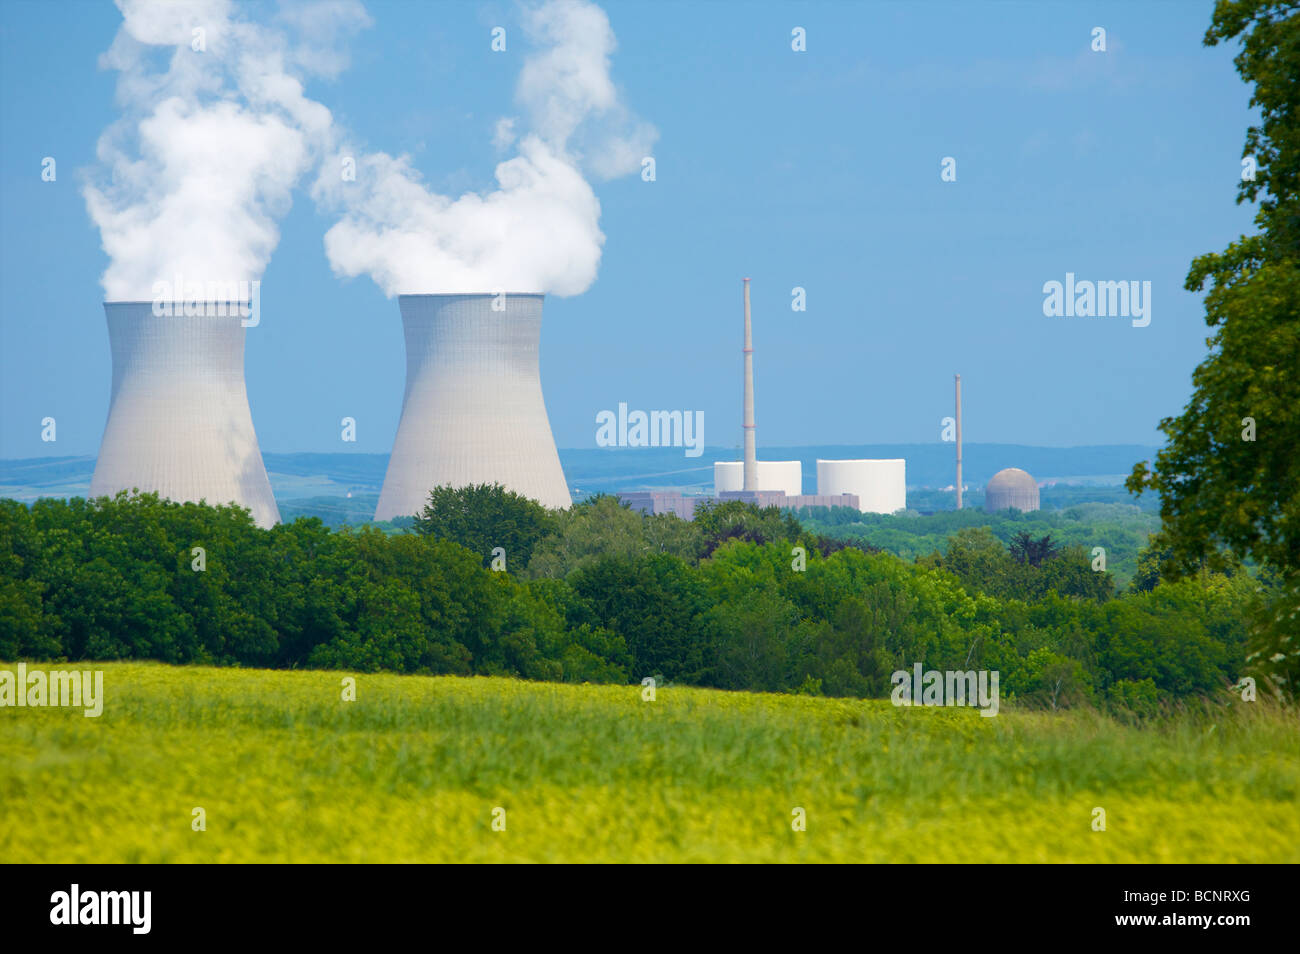 La planta de energía nuclear de Gundremmingen en Baviera, Alemania. 2 activo reactores BWR. Kernkraftwerk Gundremmingen, Bayern, Deutschland. Foto de stock